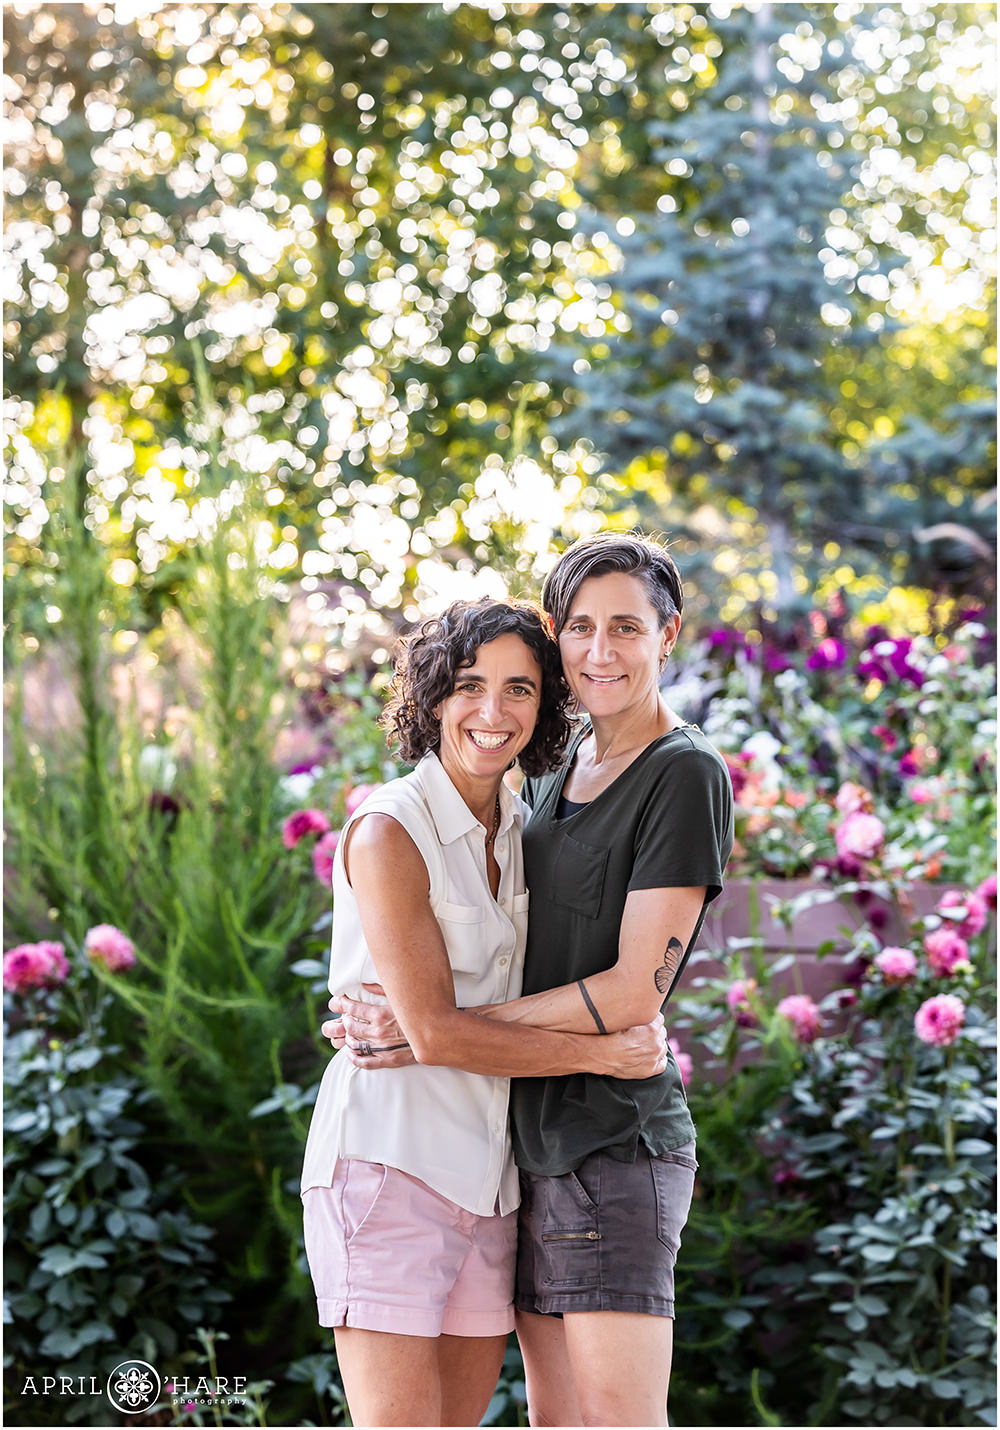 Beautiful pretty pink garden setting for a couples portrait at Denver Botanic Gardens